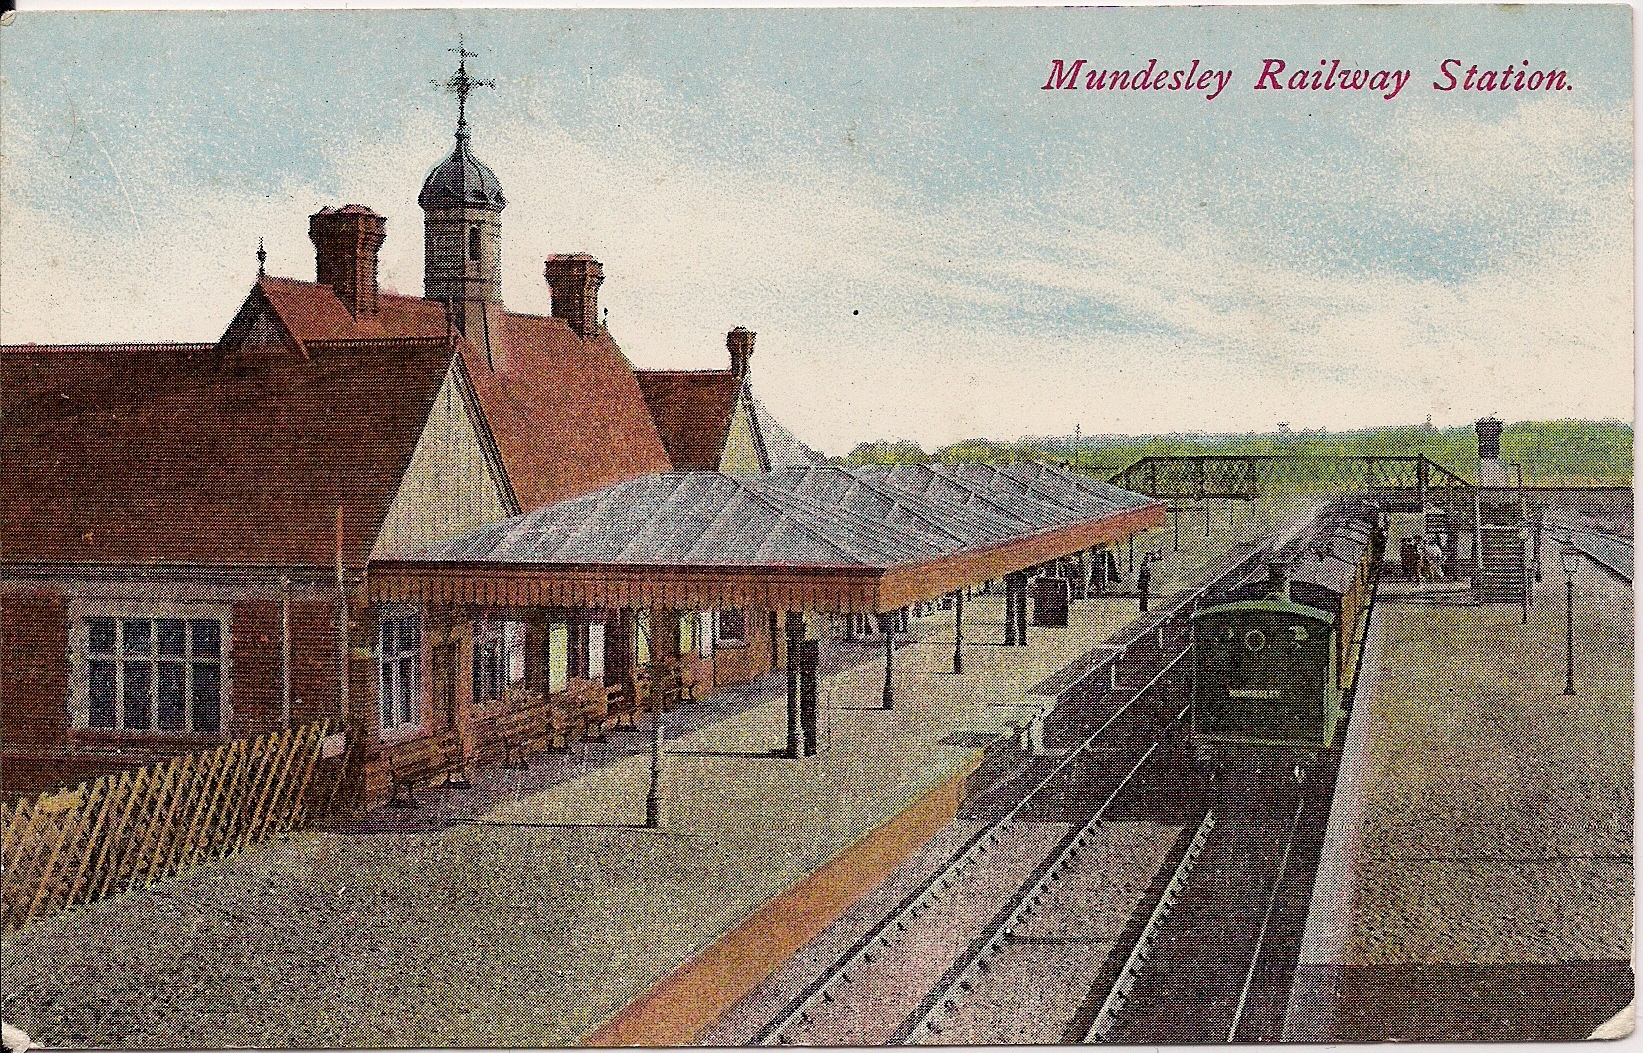 Mundesley-on-Sea railway station